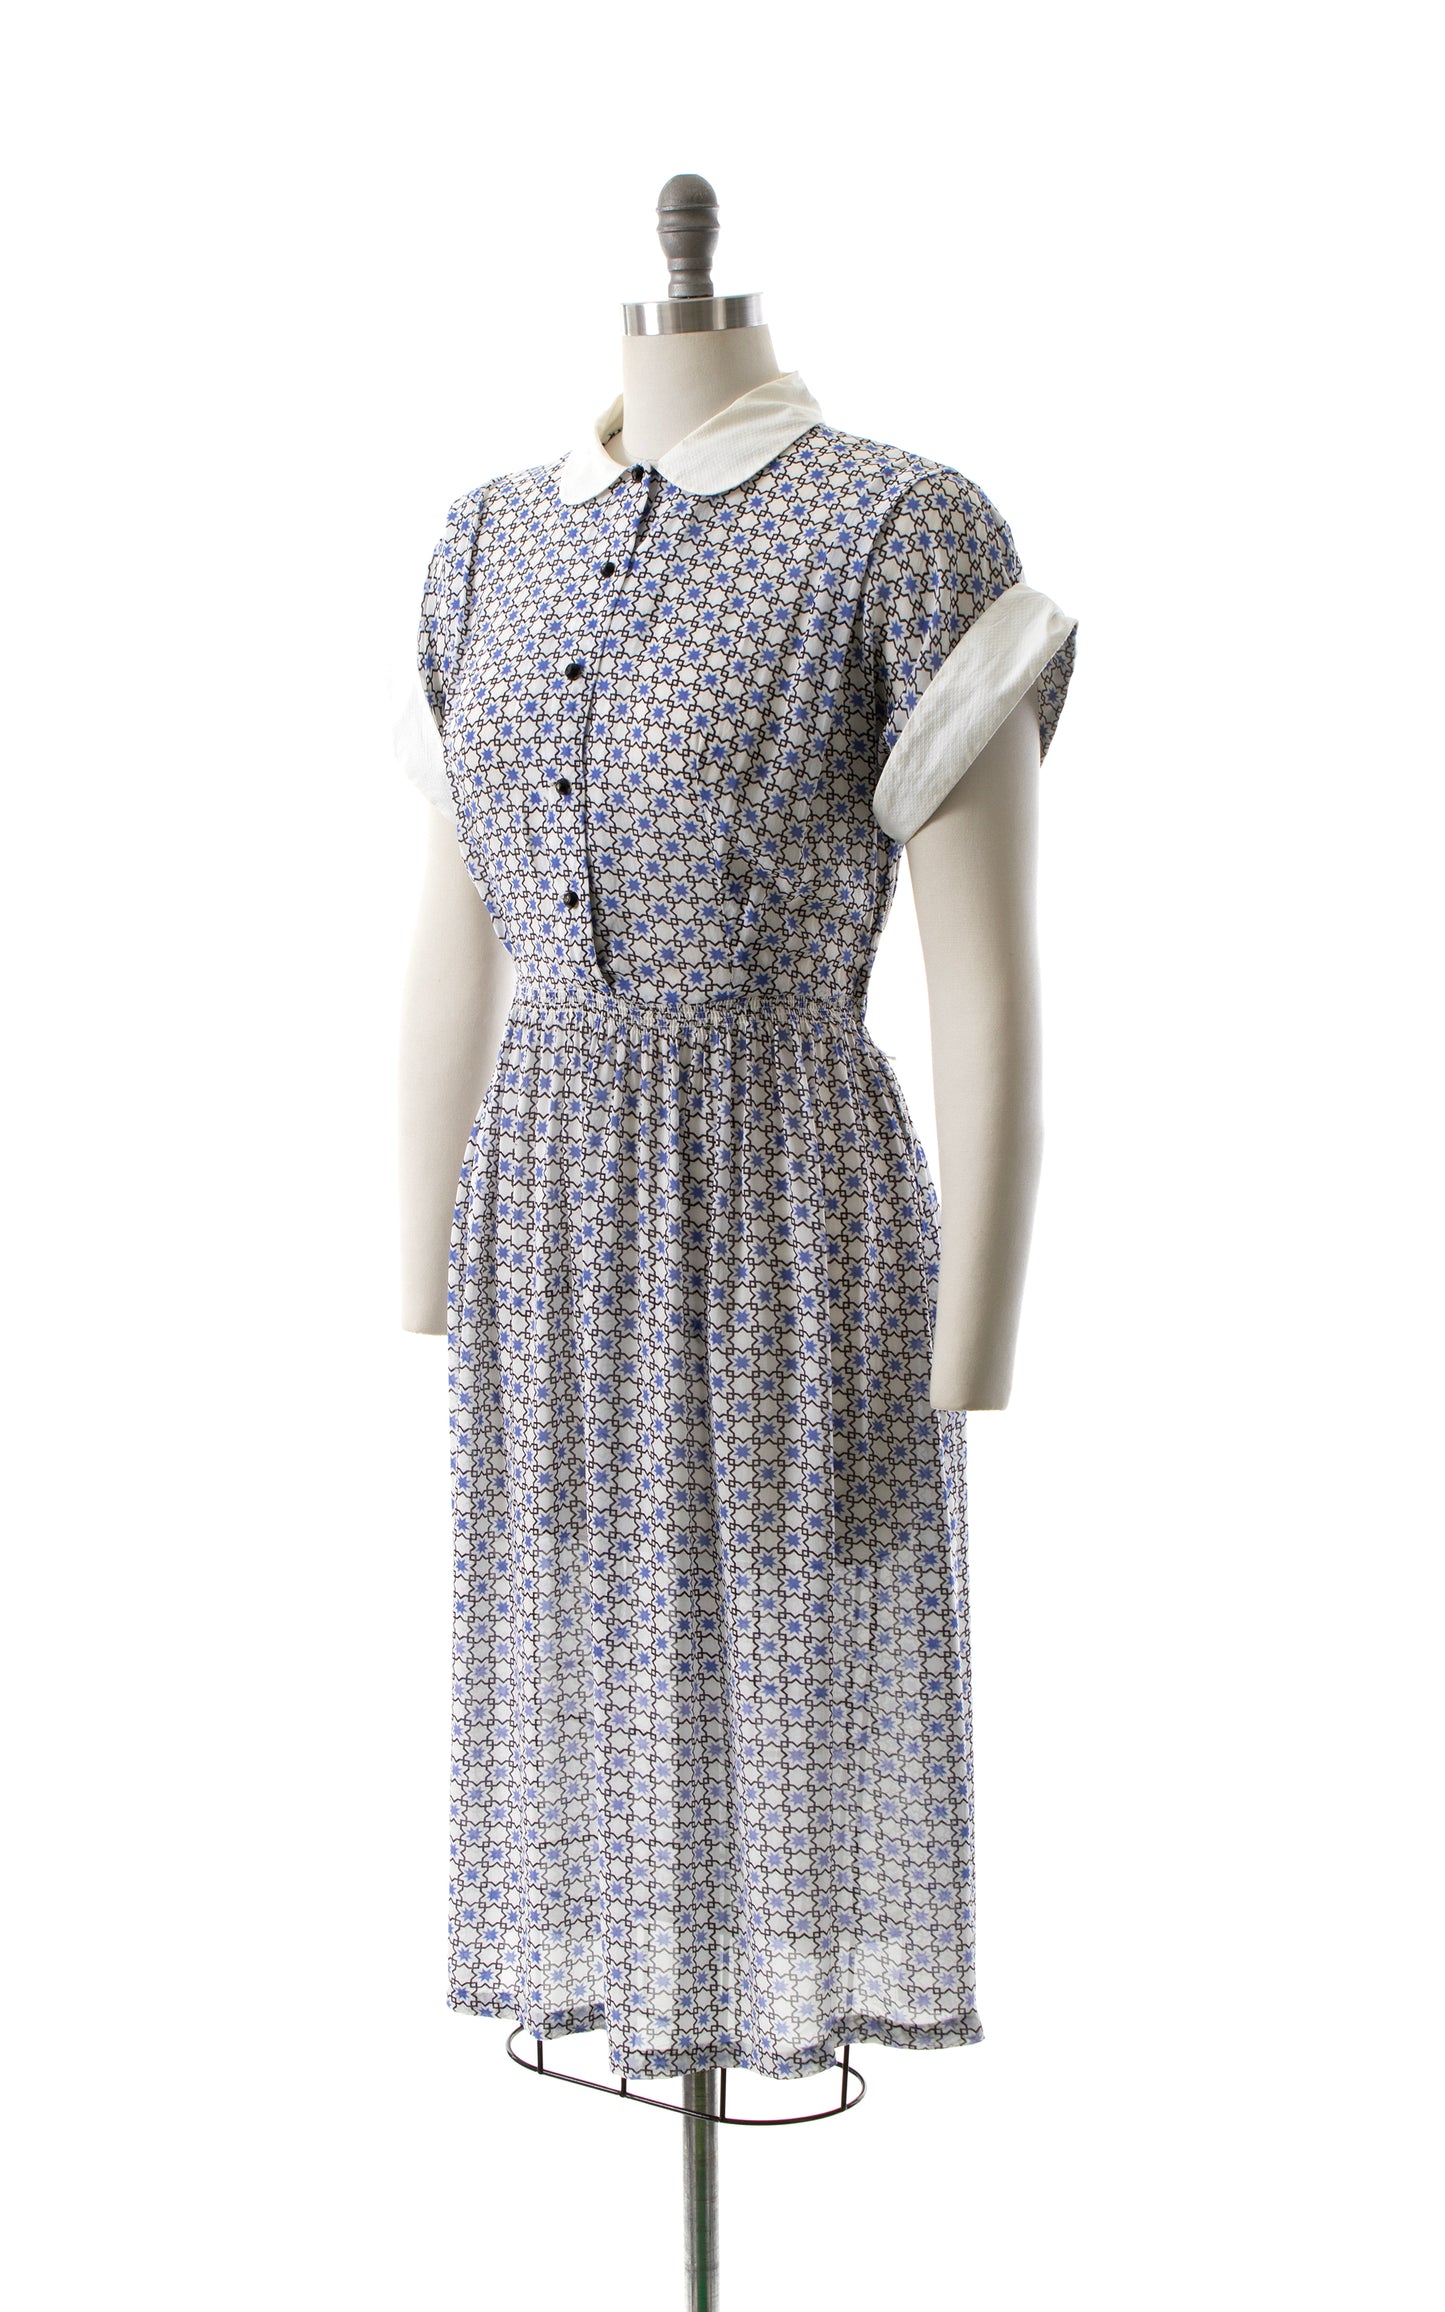 NEW ARRIVAL || 1940s Geometric Cold Rayon Shirtwaist Dress | medium